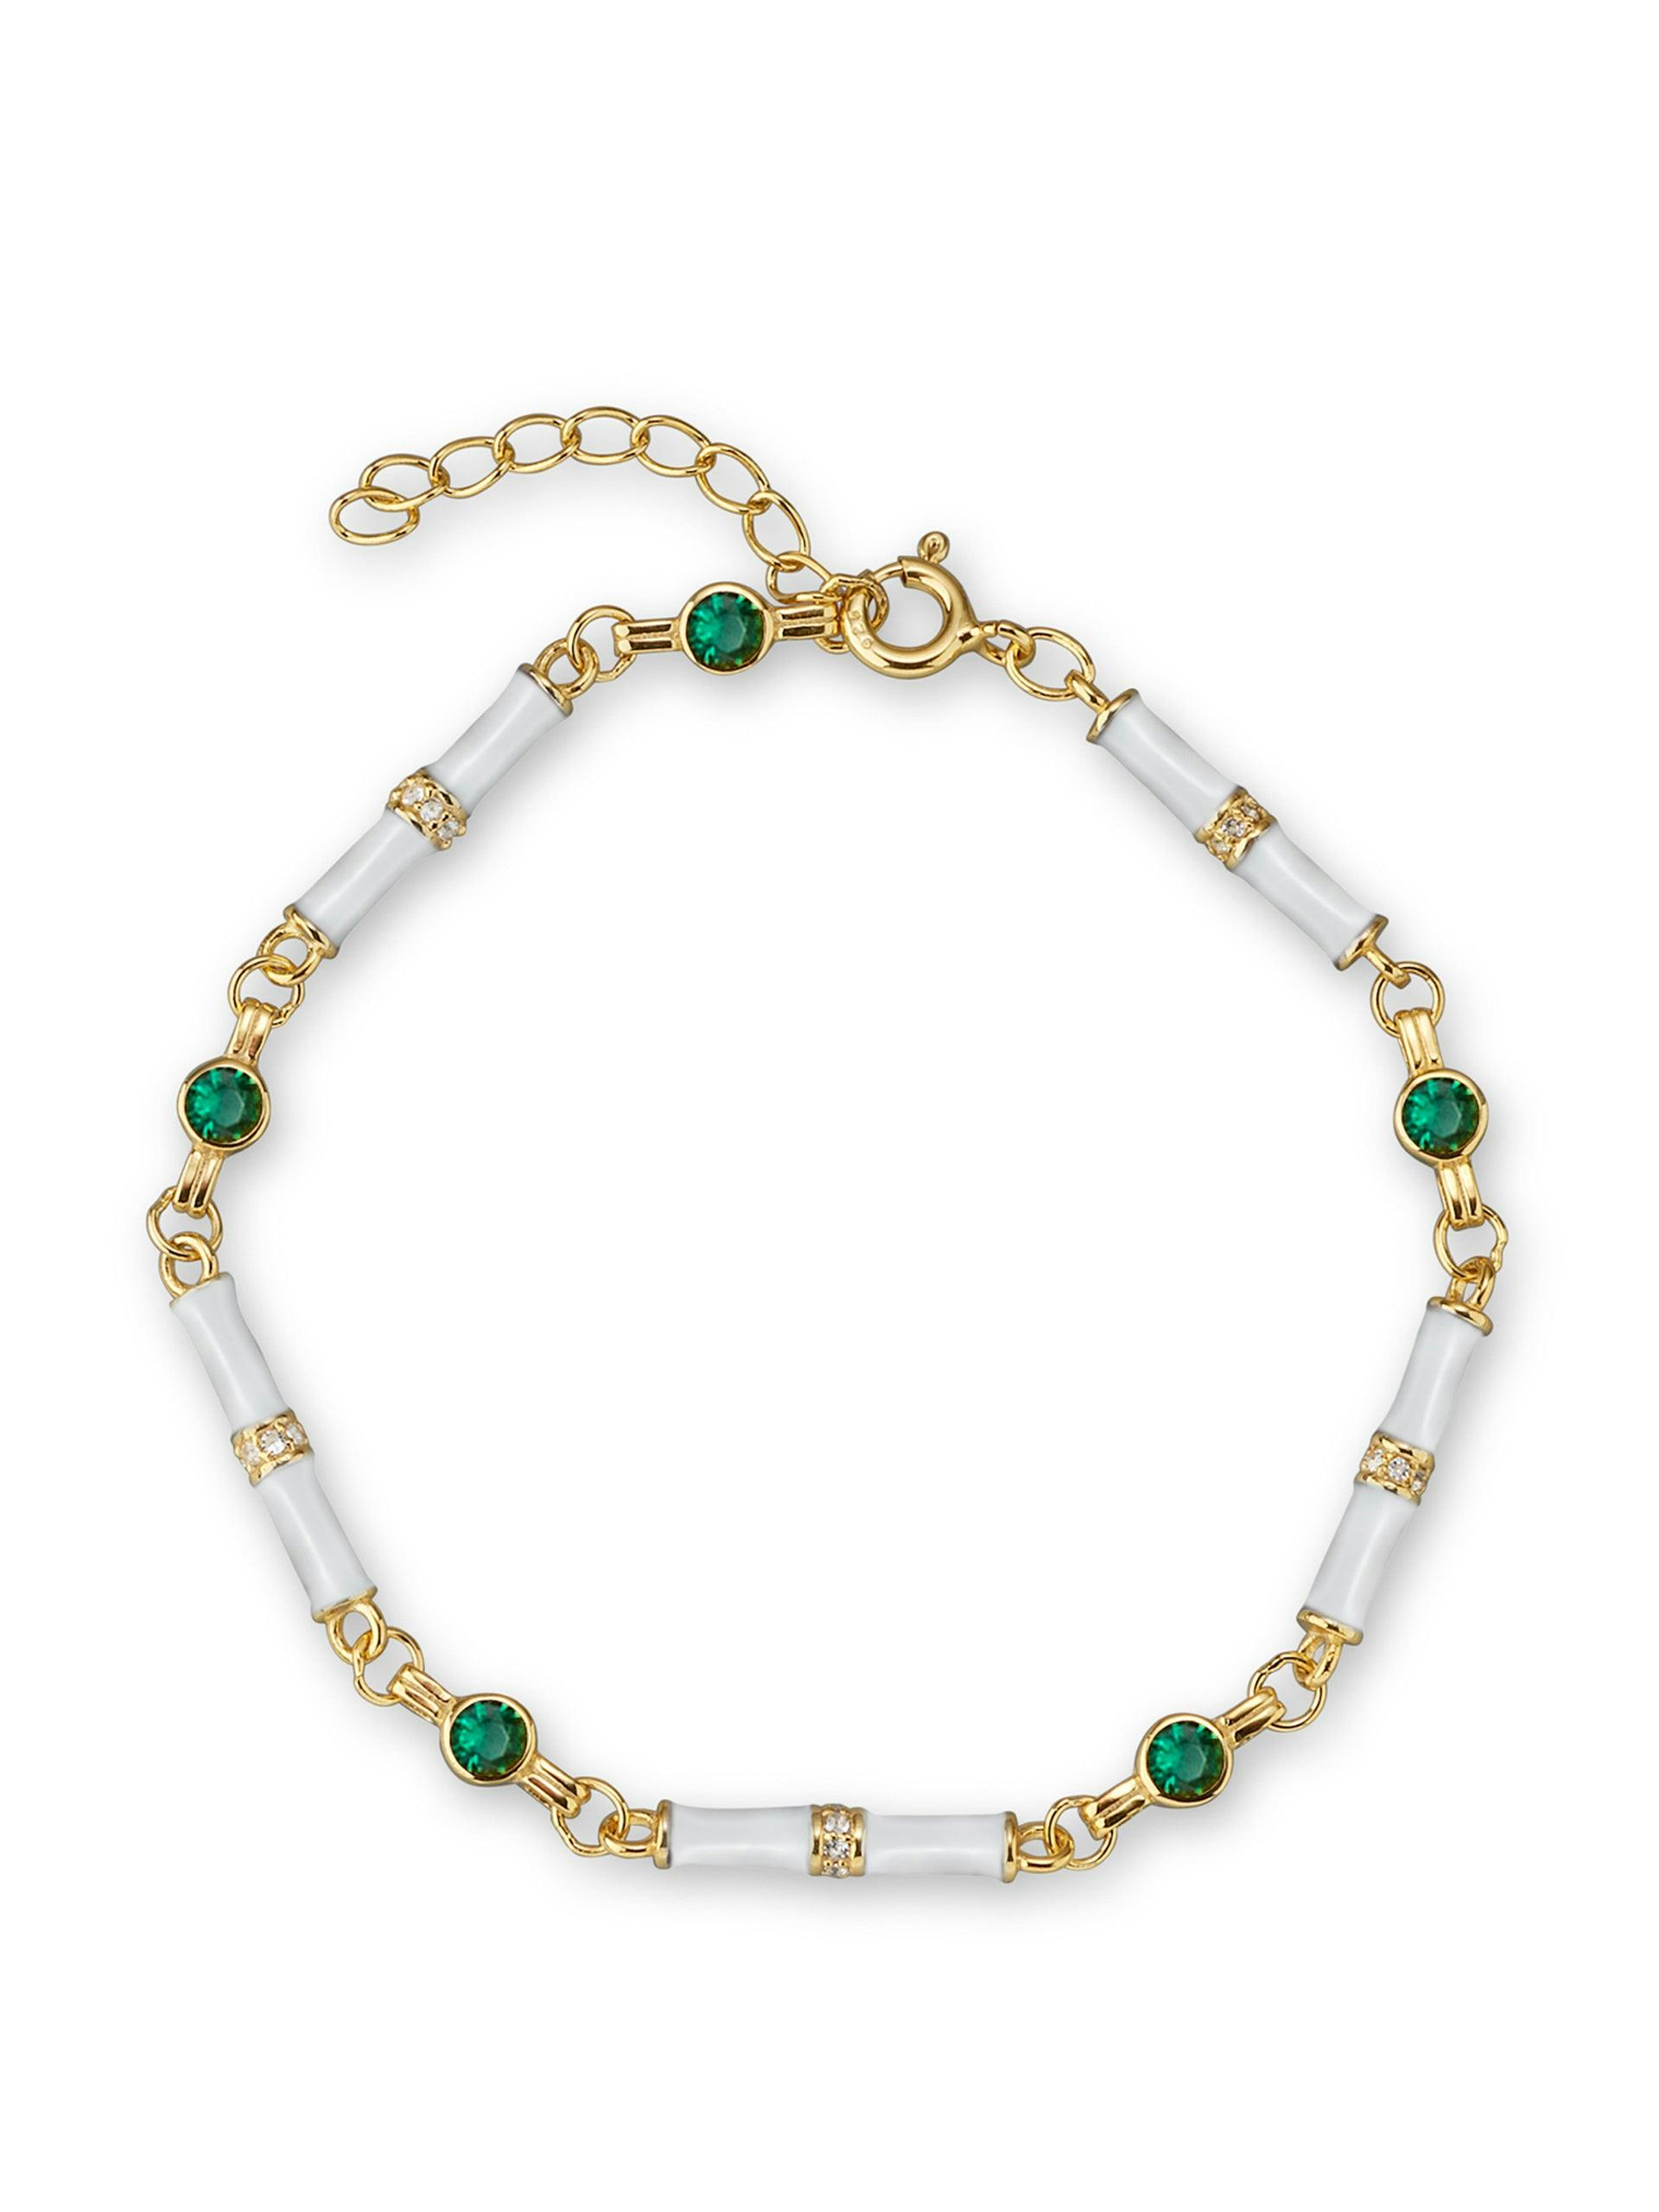 Marlowe white enamel bracelet with emerald green stone